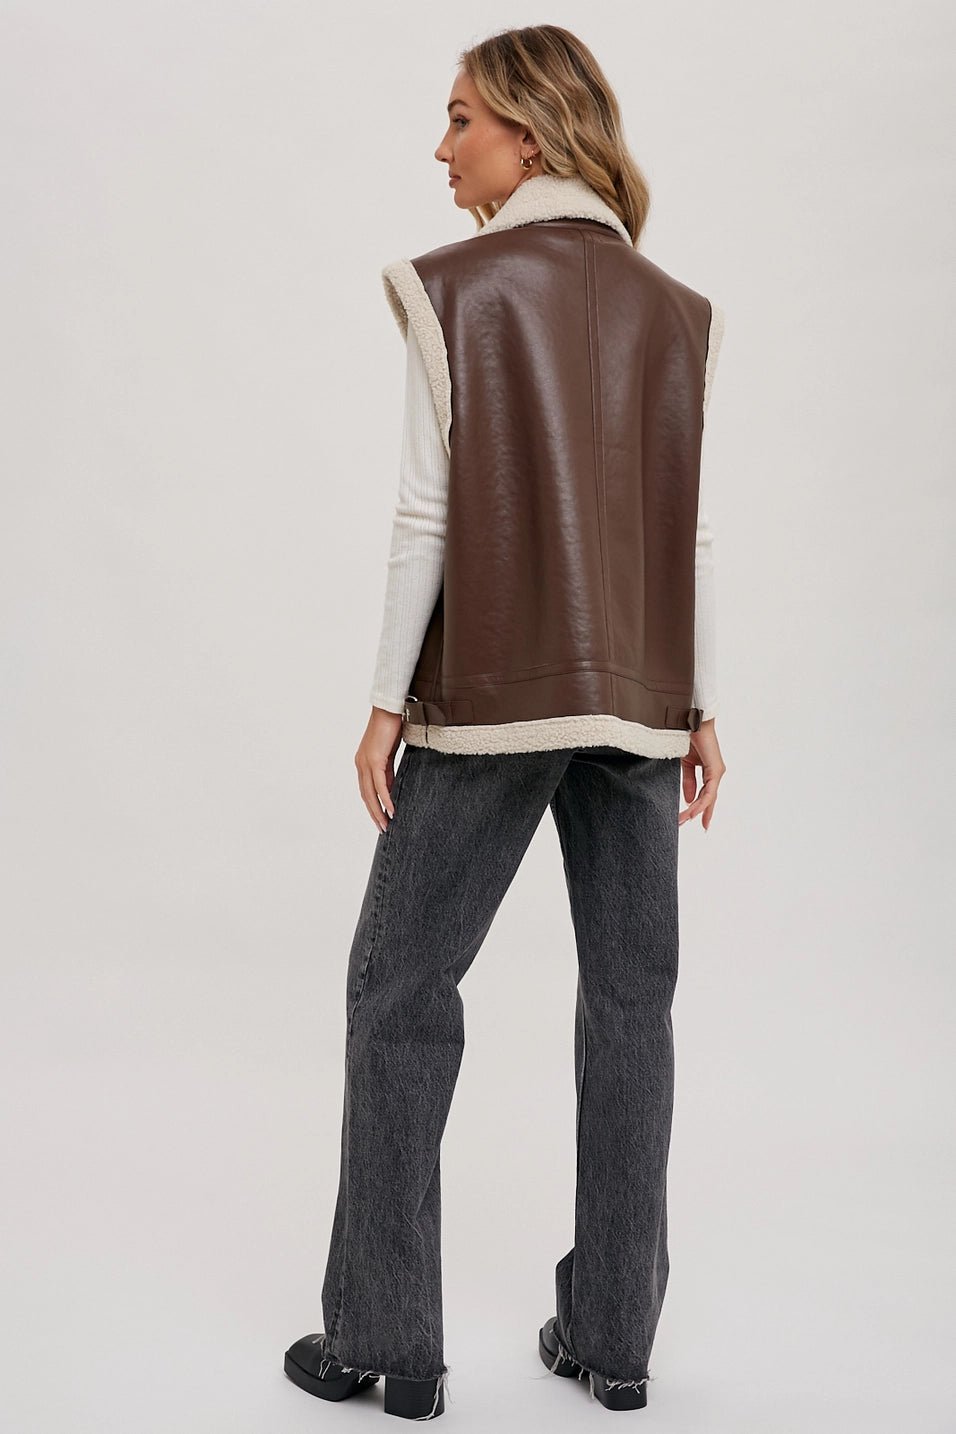 Vegan Leather Vest With Buckle Details